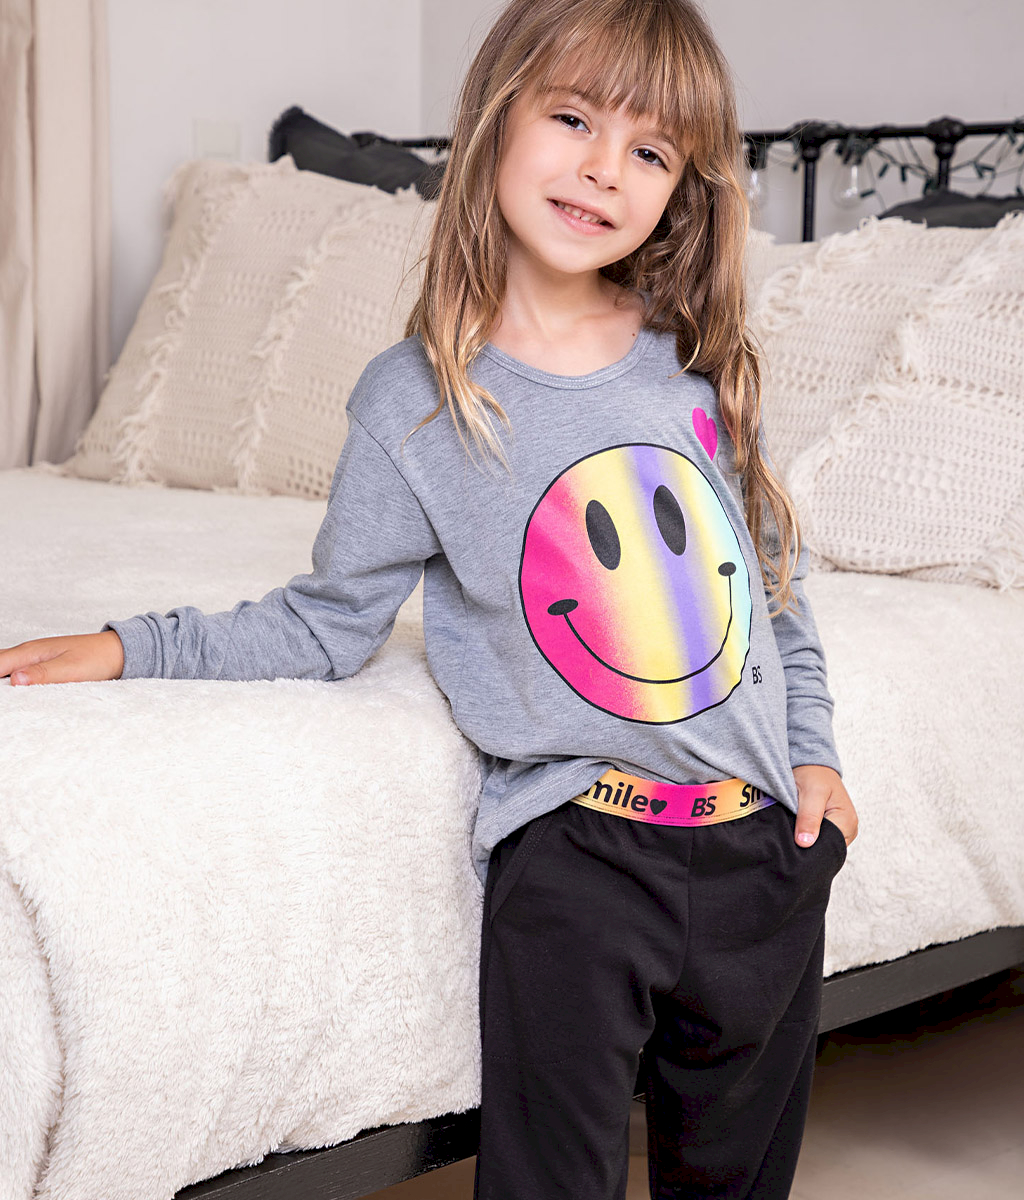 Pijama SMILE kids plus size FW - Bianca Secreta